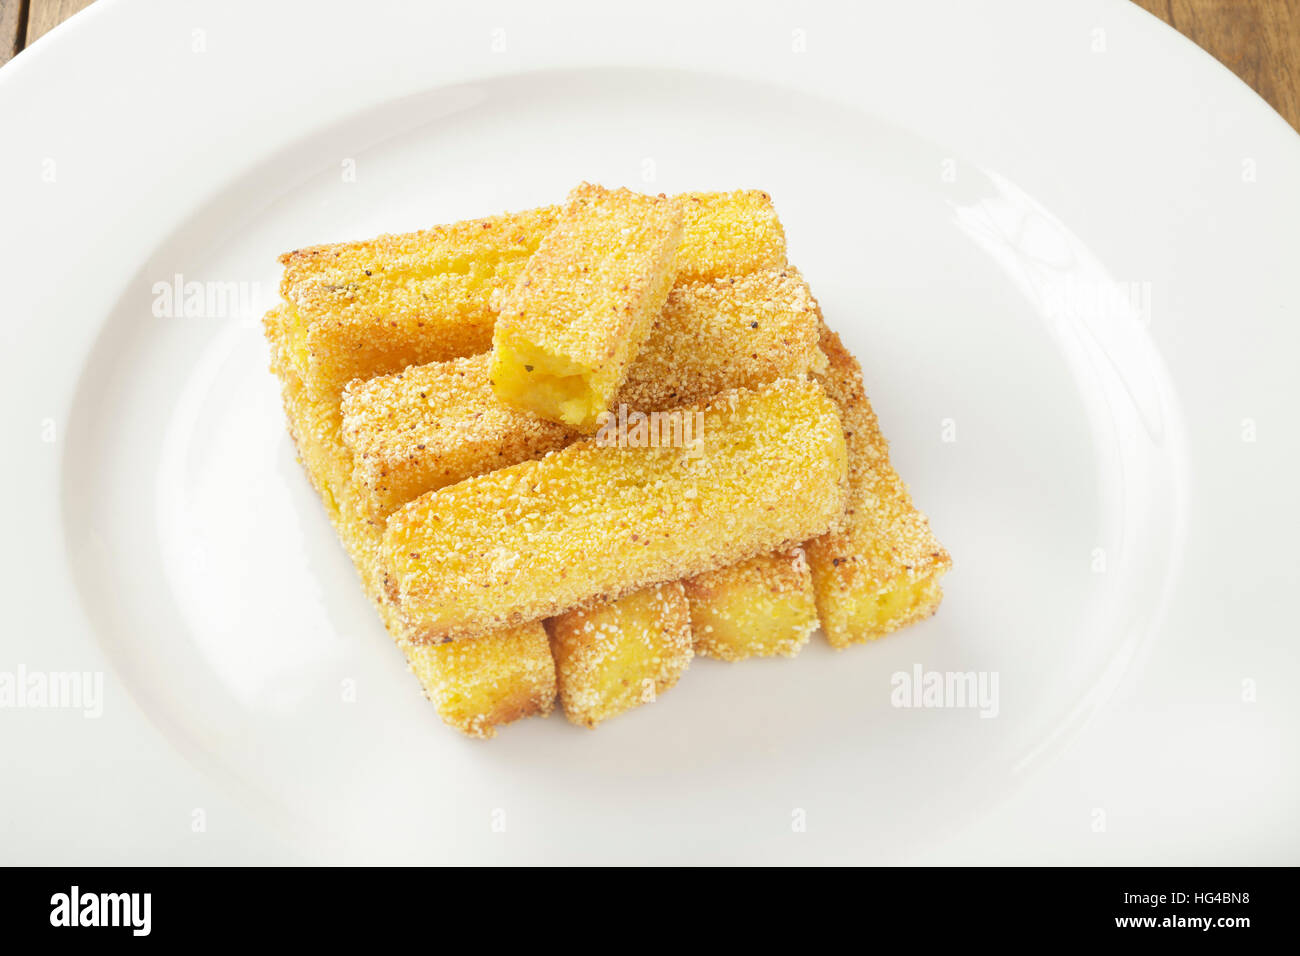 Polenta fries / chips Stock Photo